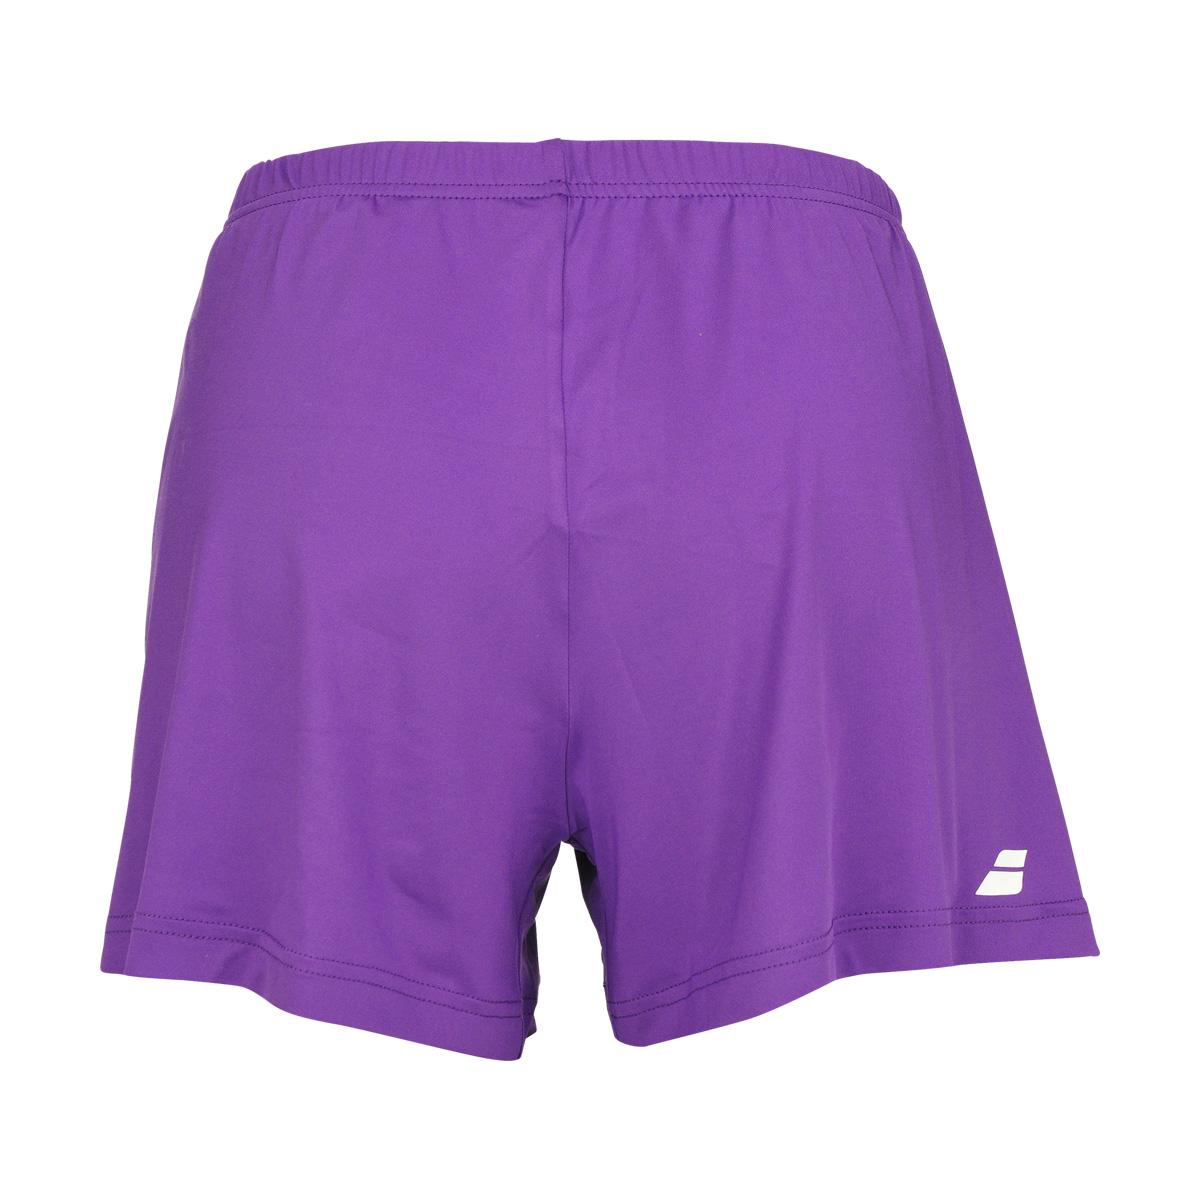 purple shorts for girls